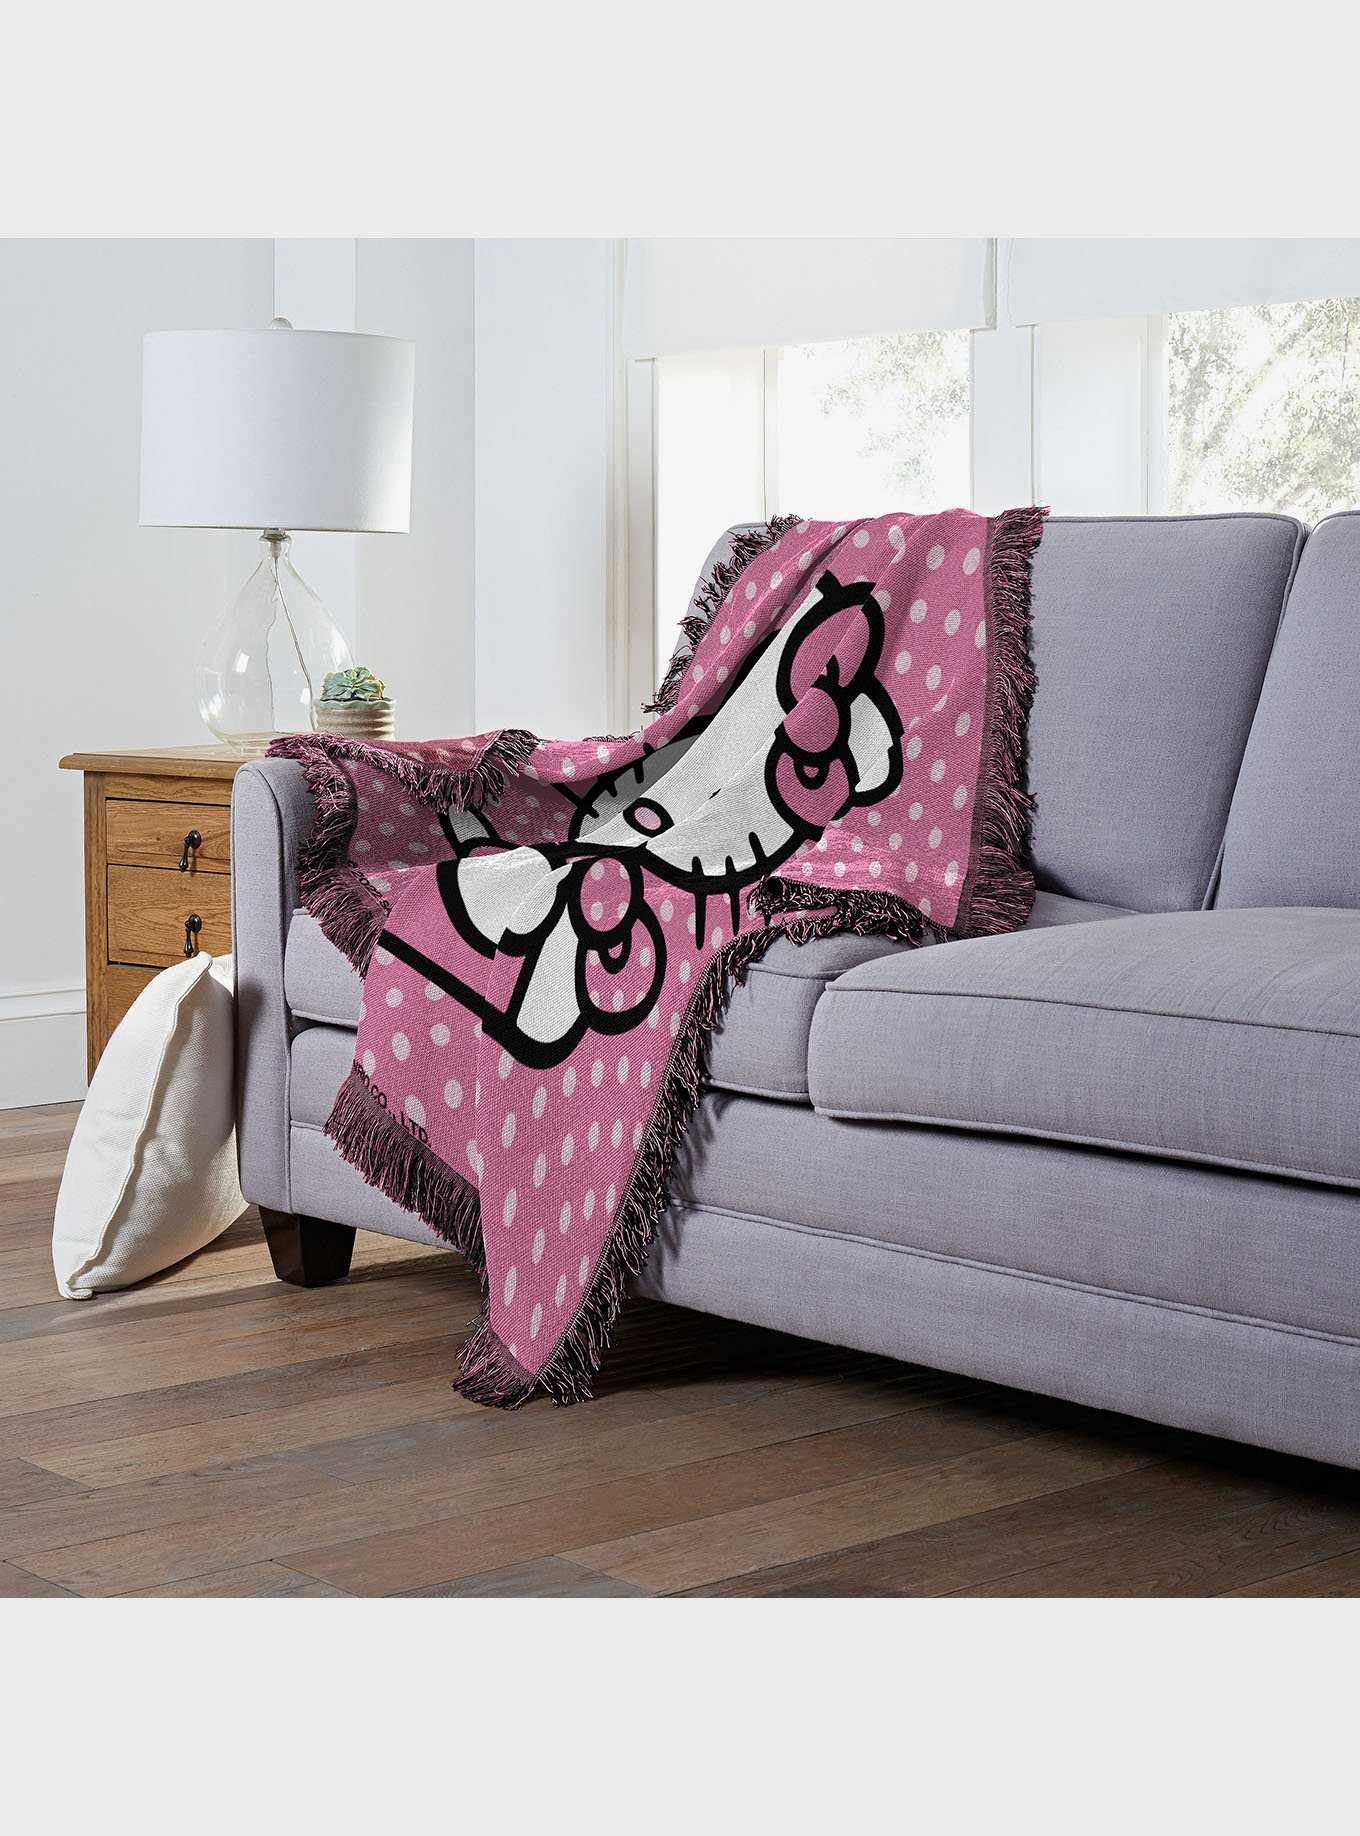 Hello Kitty Perfect Polka Dots Woven Jacquard Throw Blanket, , hi-res